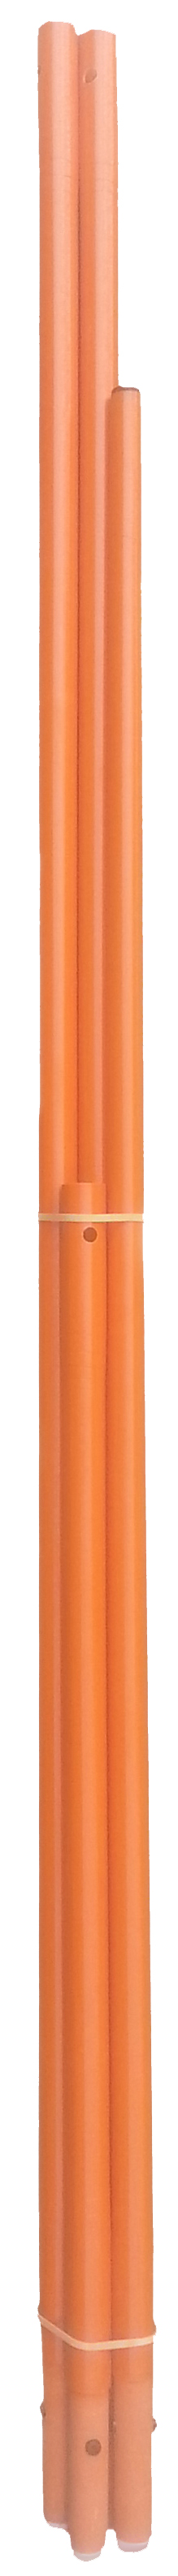 kit perche orange 6m